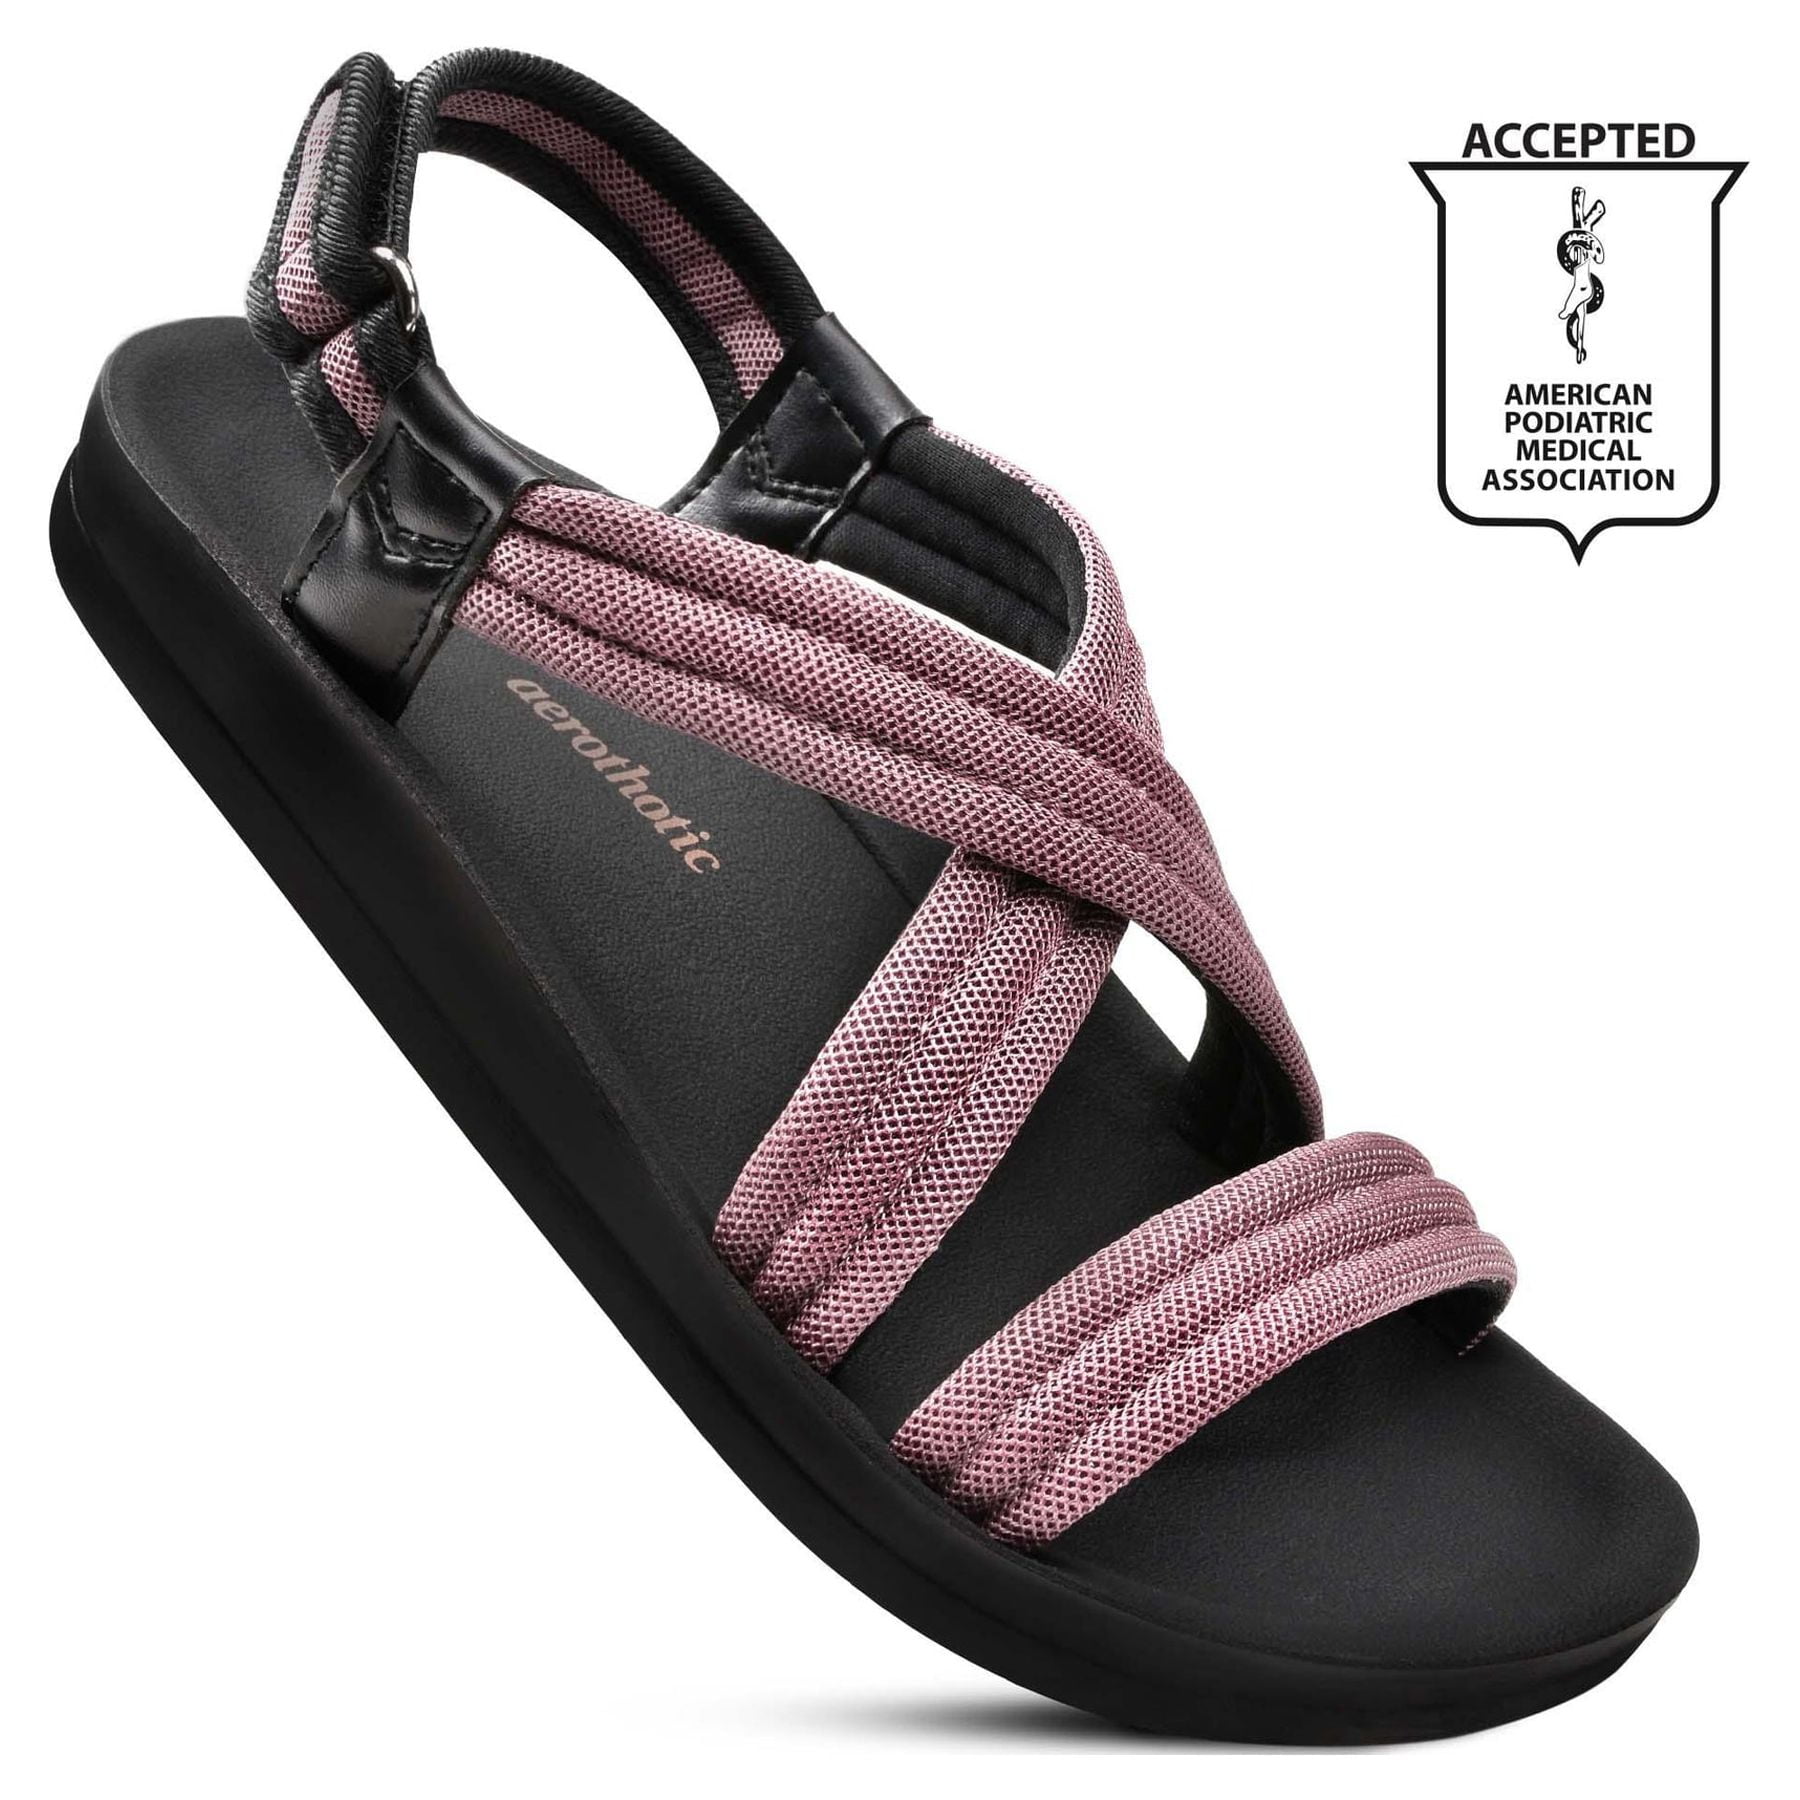 Dotmalls Comfortable Orthopedic Sandals for Women, Sursell